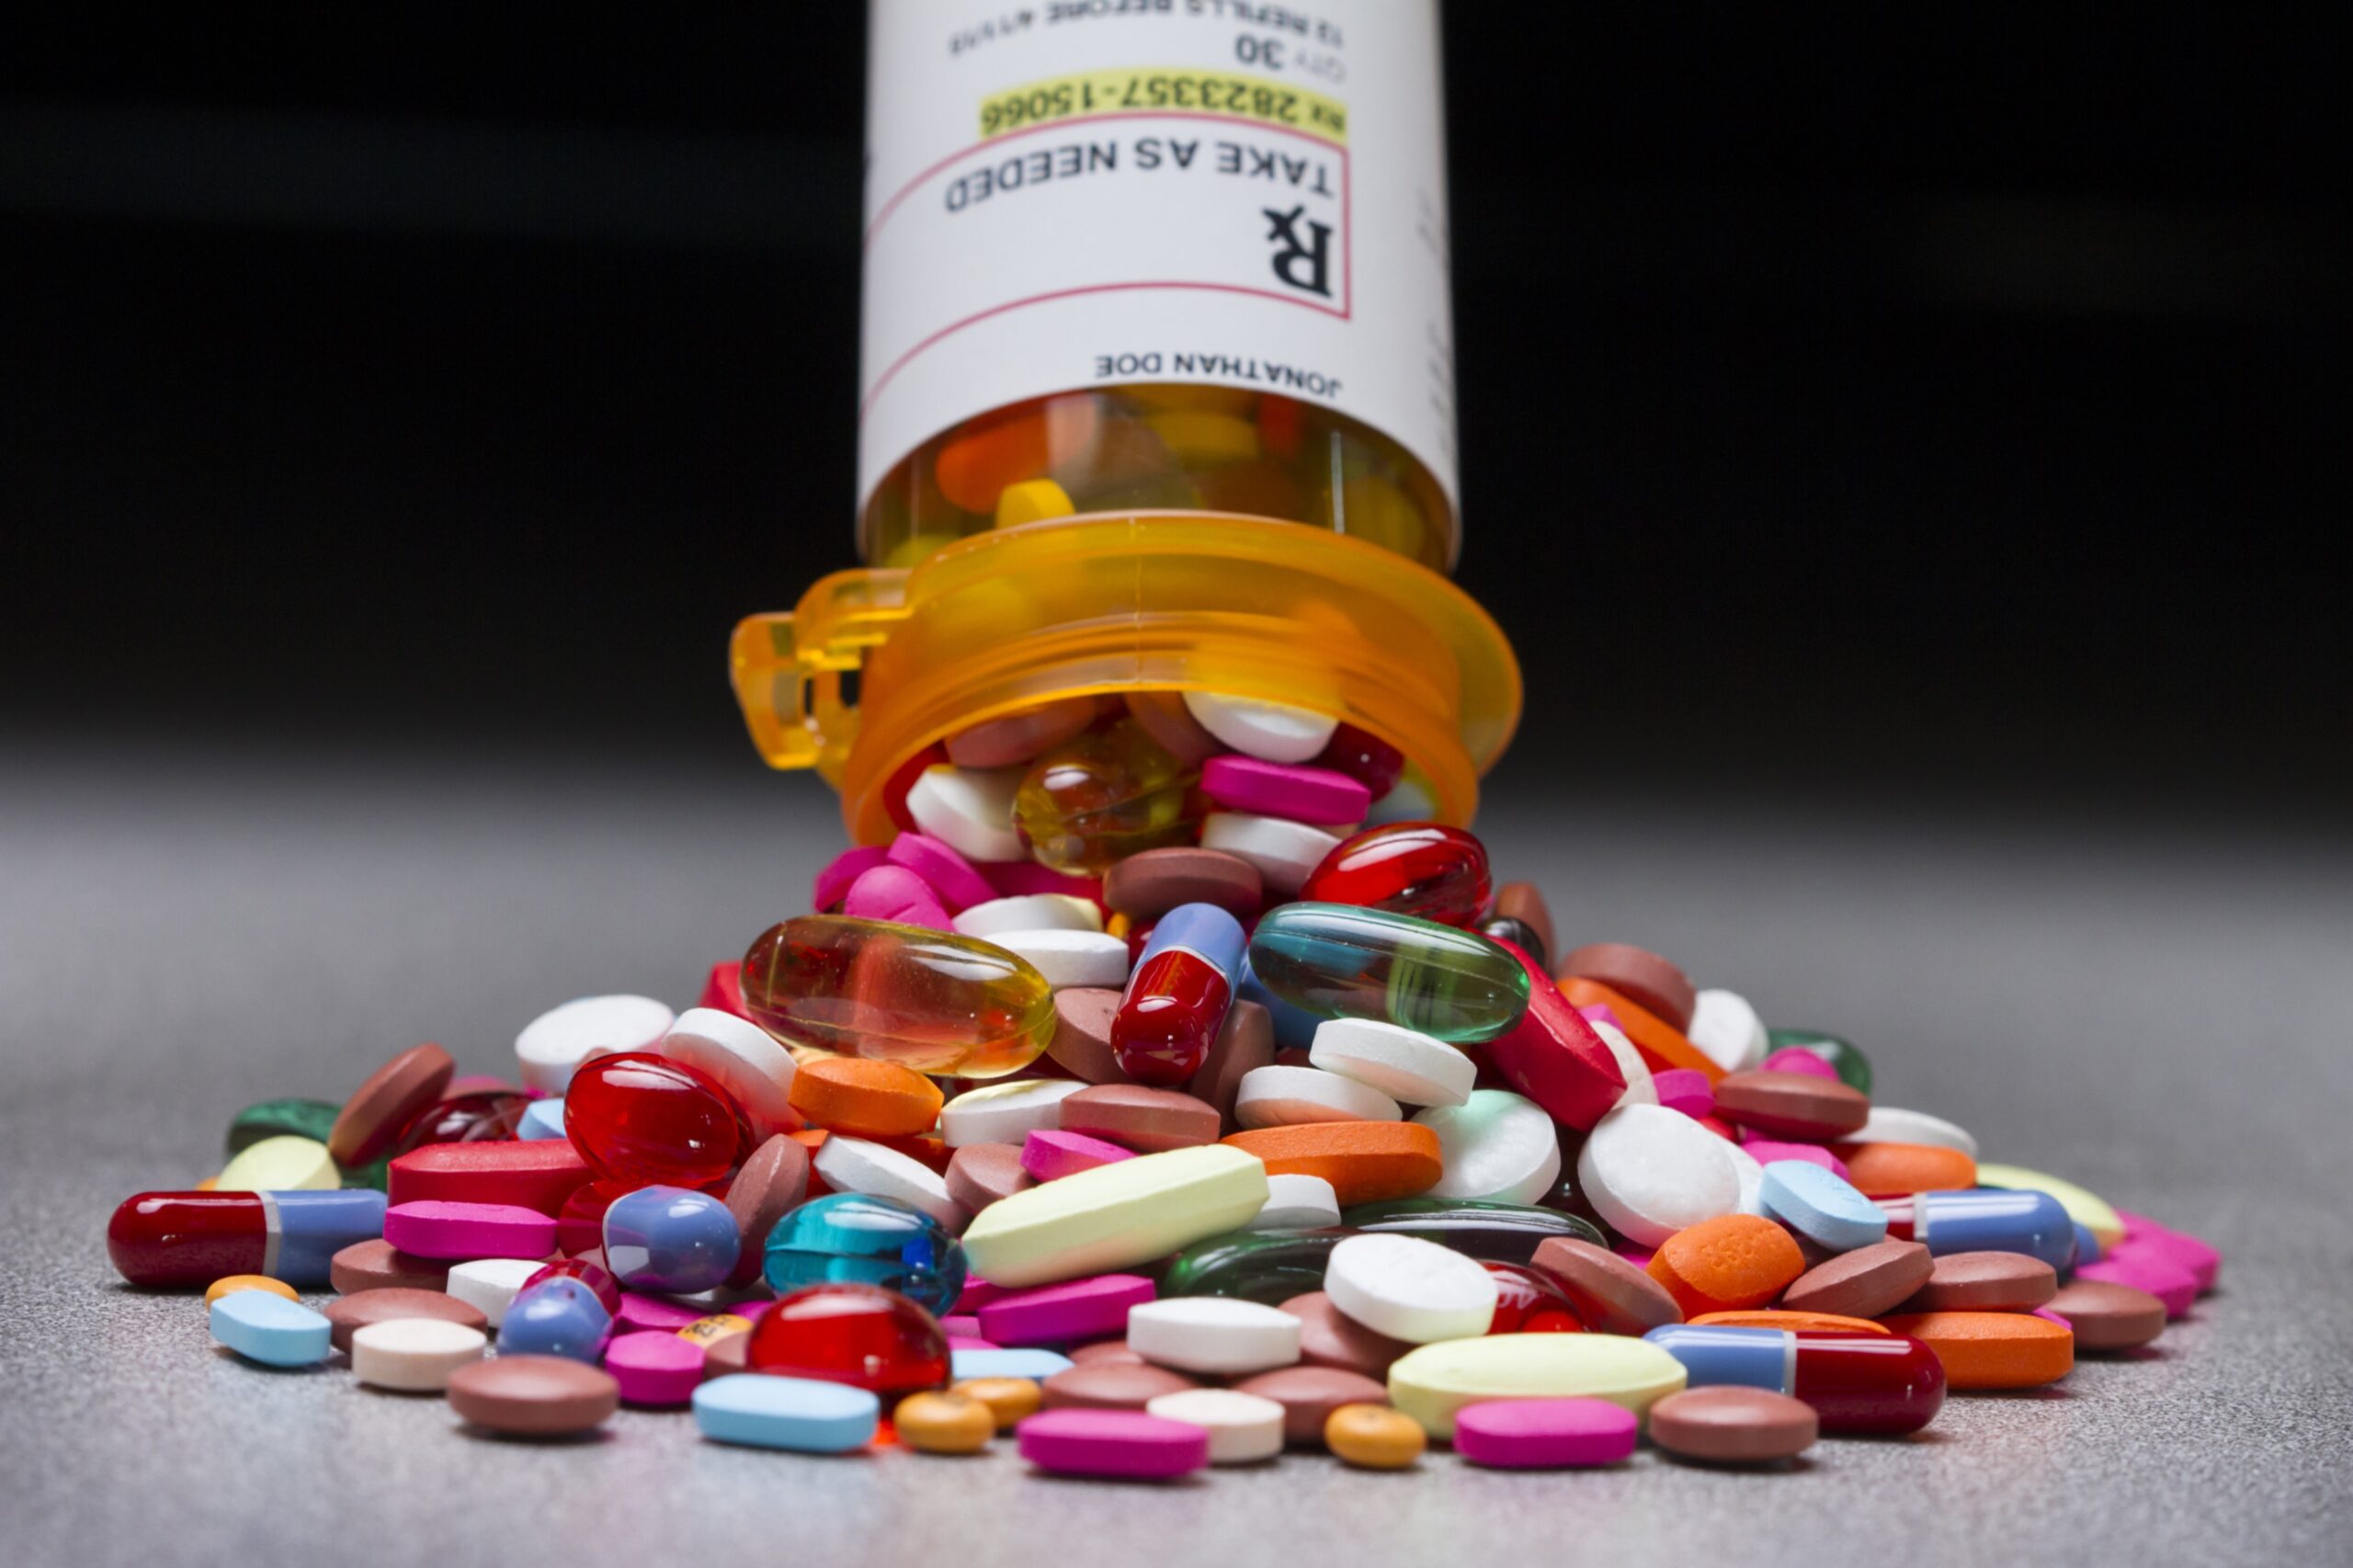 Cold Medicines Containing Opioids